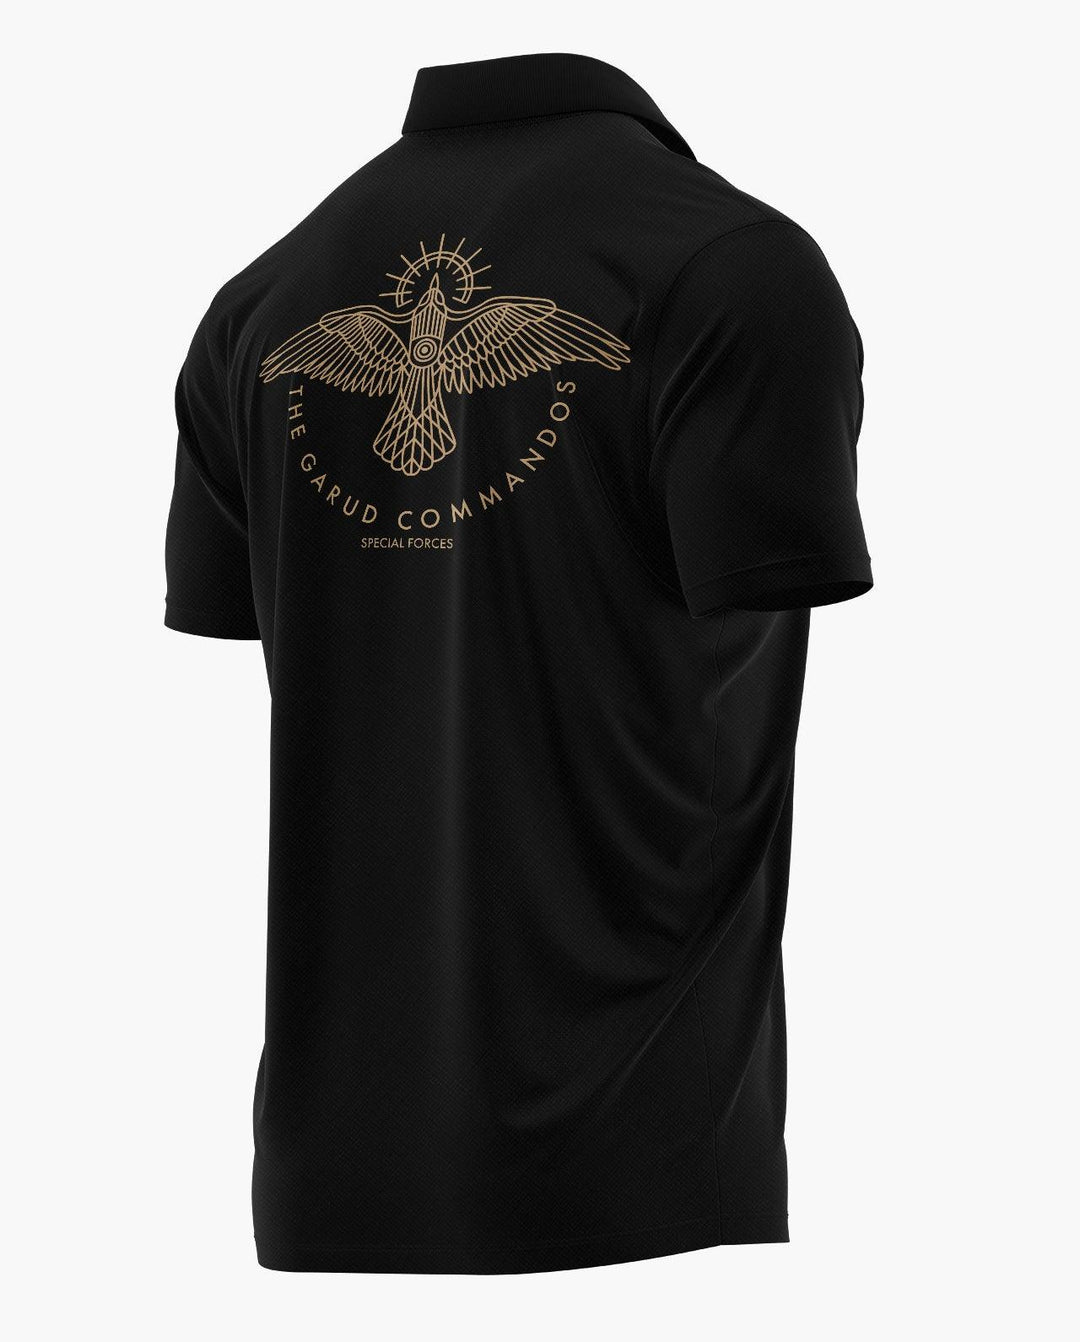 Garud Commando SF Polo T-Shirt - Aero Armour